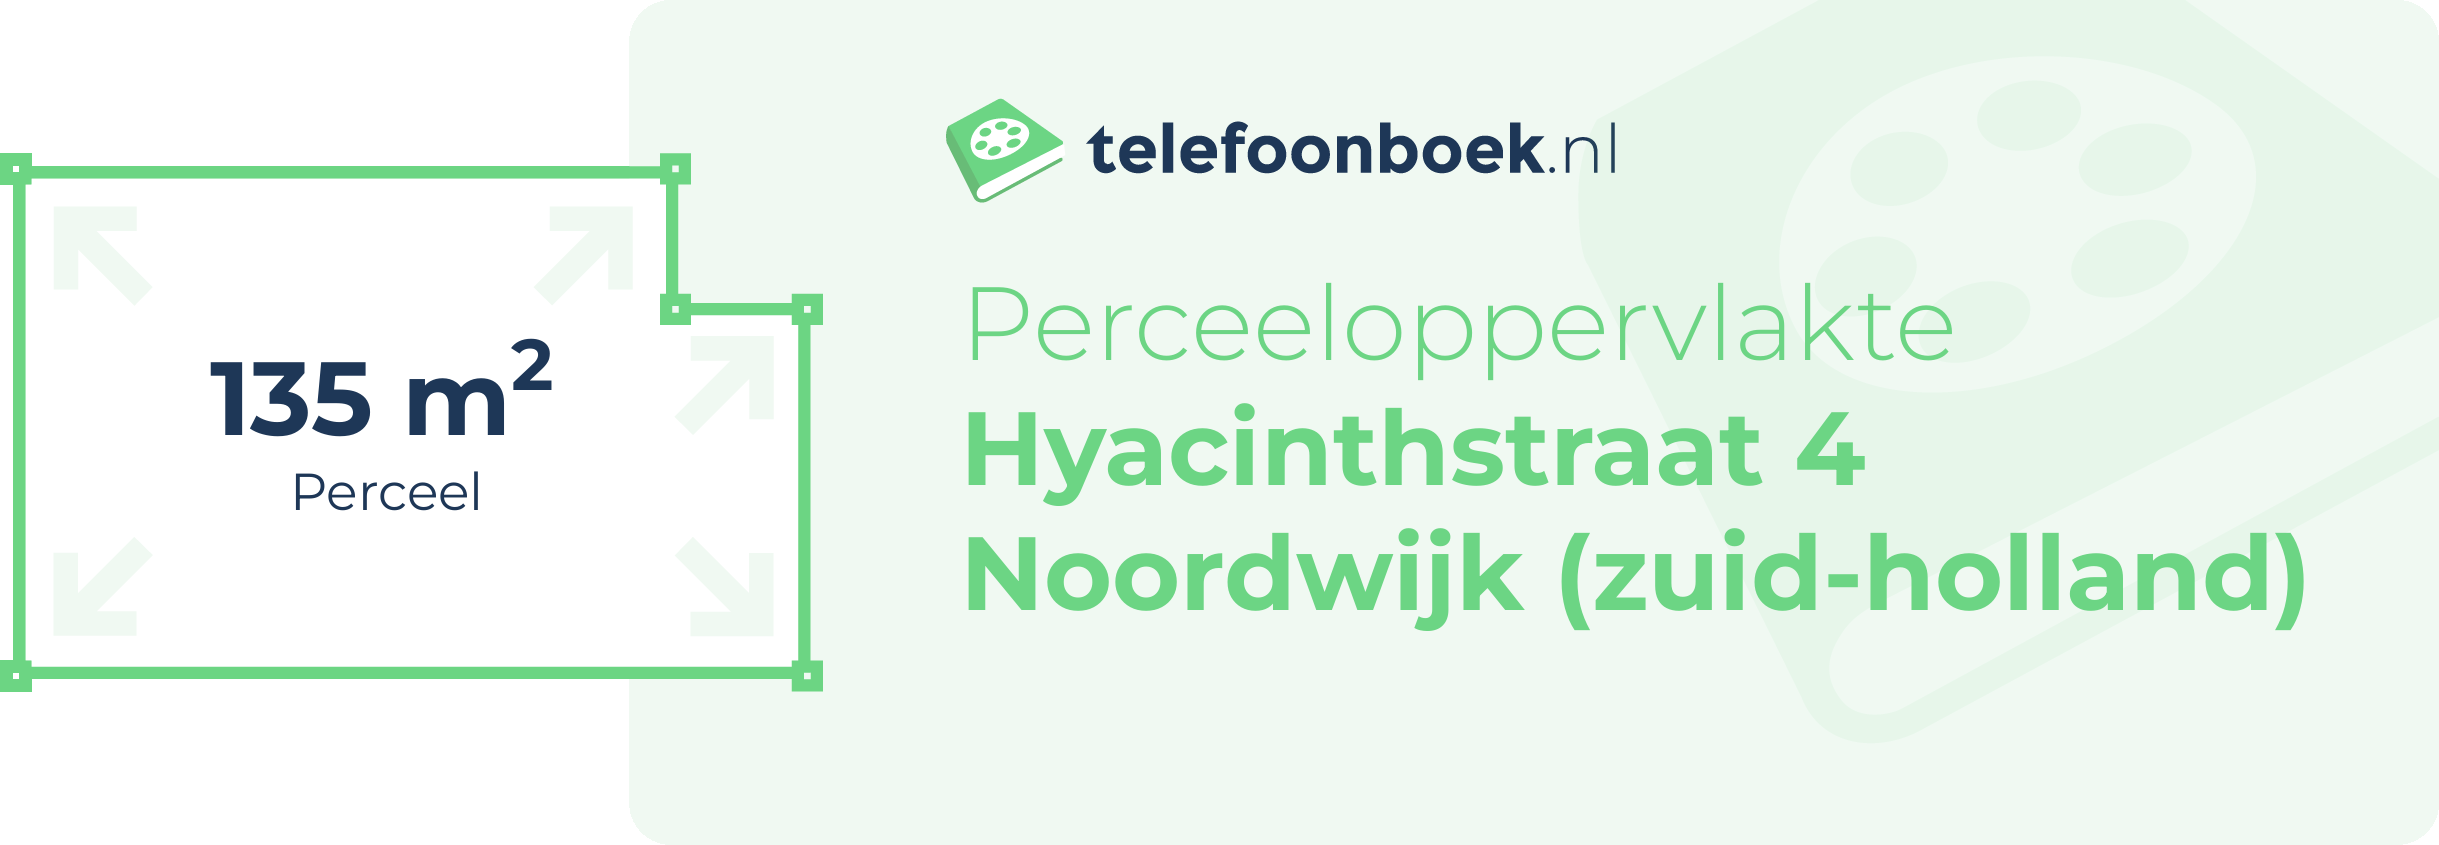 Perceeloppervlakte Hyacinthstraat 4 Noordwijk (Zuid-Holland)